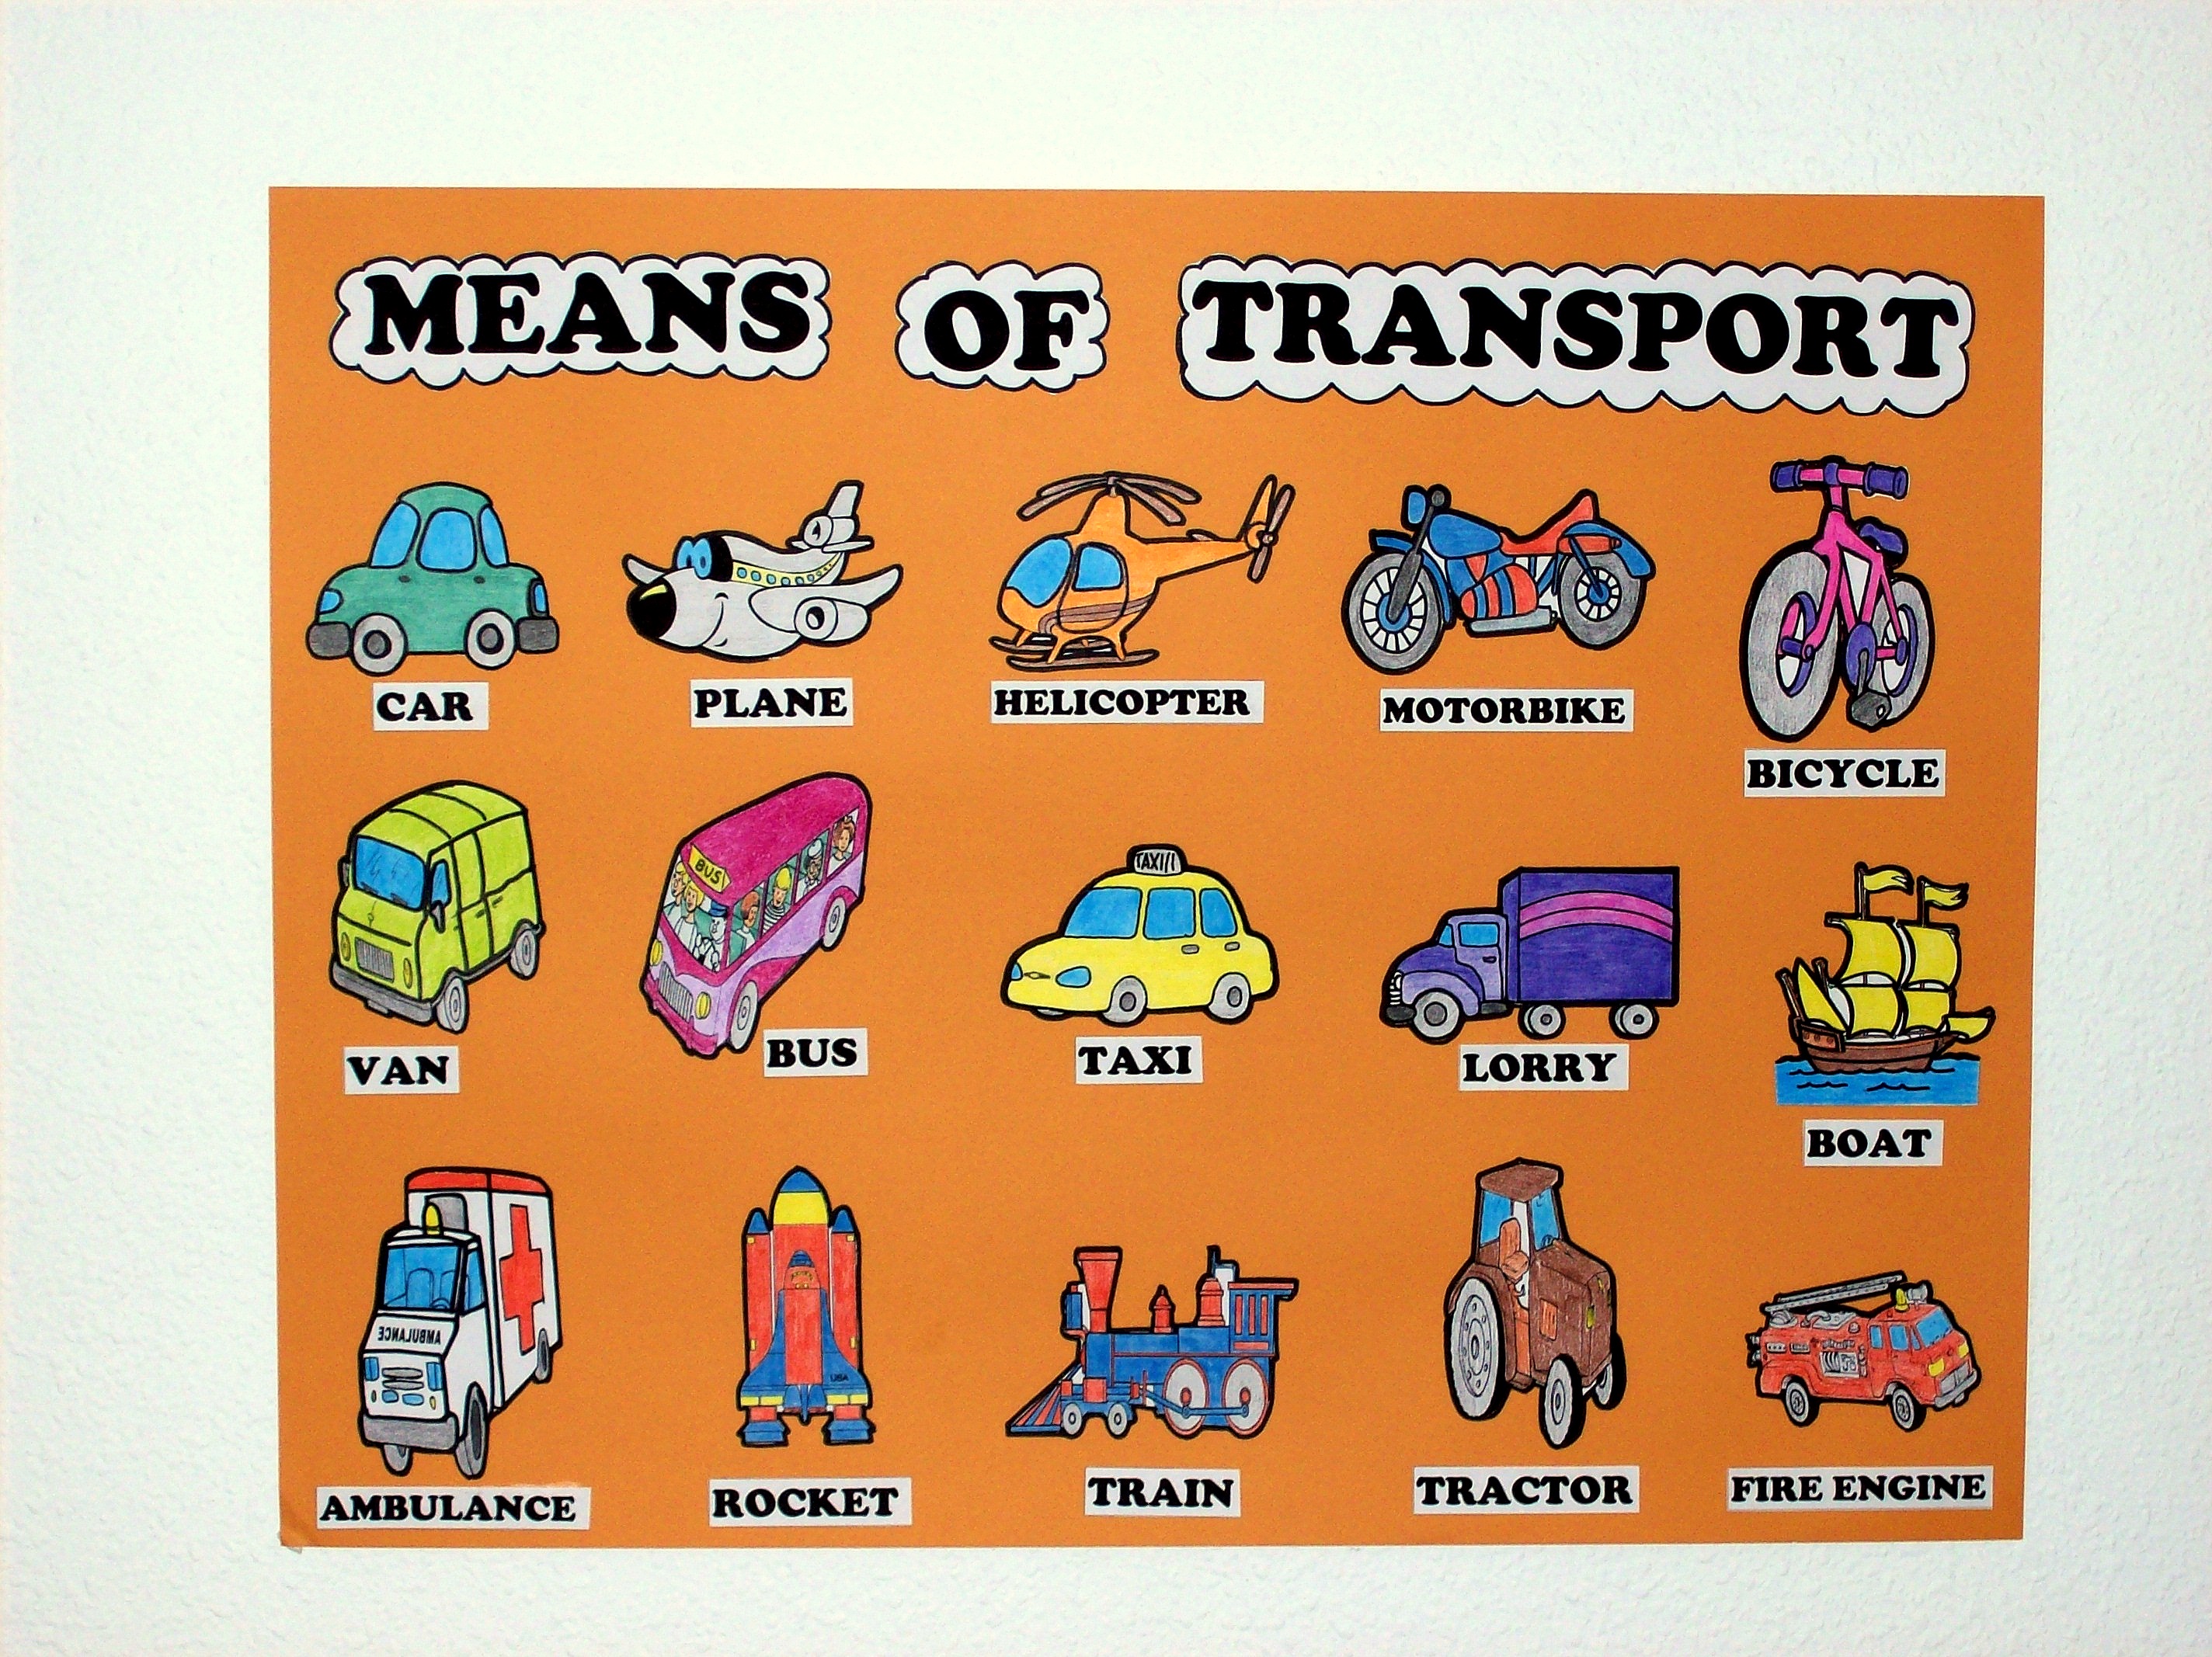 Cars перевод на русский с английского. Транспорт на английском. Транспорт на английском для детей. Транспорт слова на английском. Виды транспорта на английском языке.